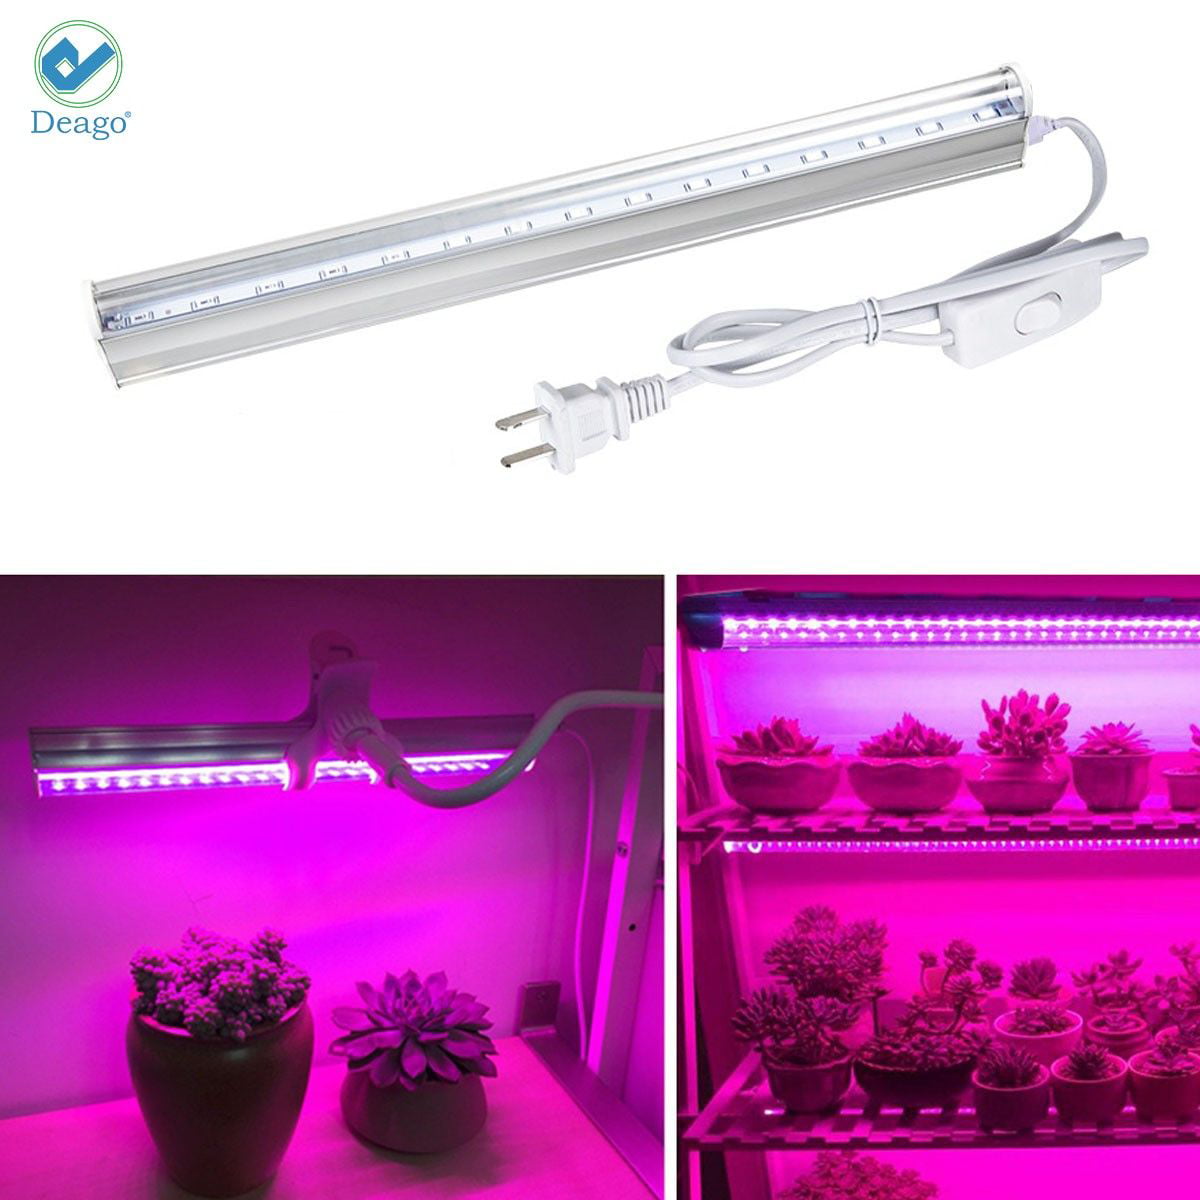 Details about   LED Grow Light Strip Plant lamp Full Spectrum Flower T5 Tube Hydroponic Garden 